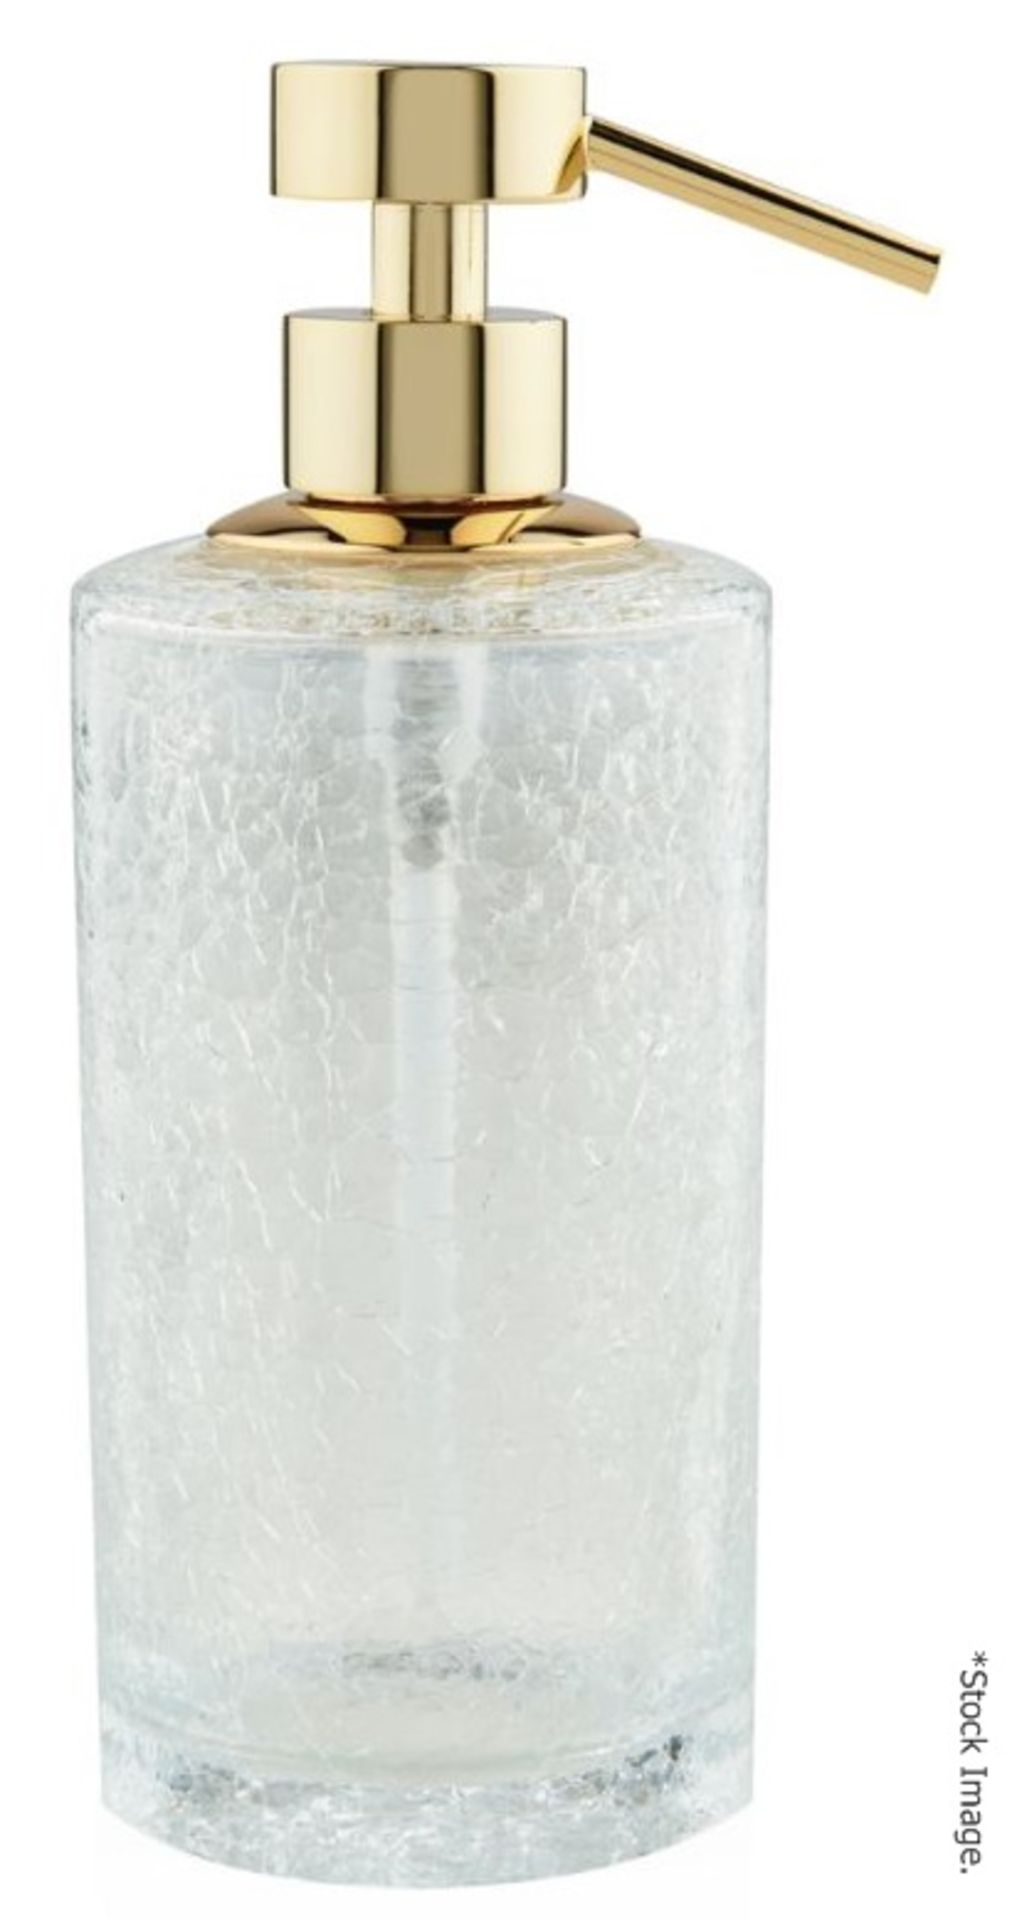 1 x 1 x ZODIAC Luxury 'Cracked Crystal' Soap Dispenser With A 24 karat Gold-Plated Pump - Original